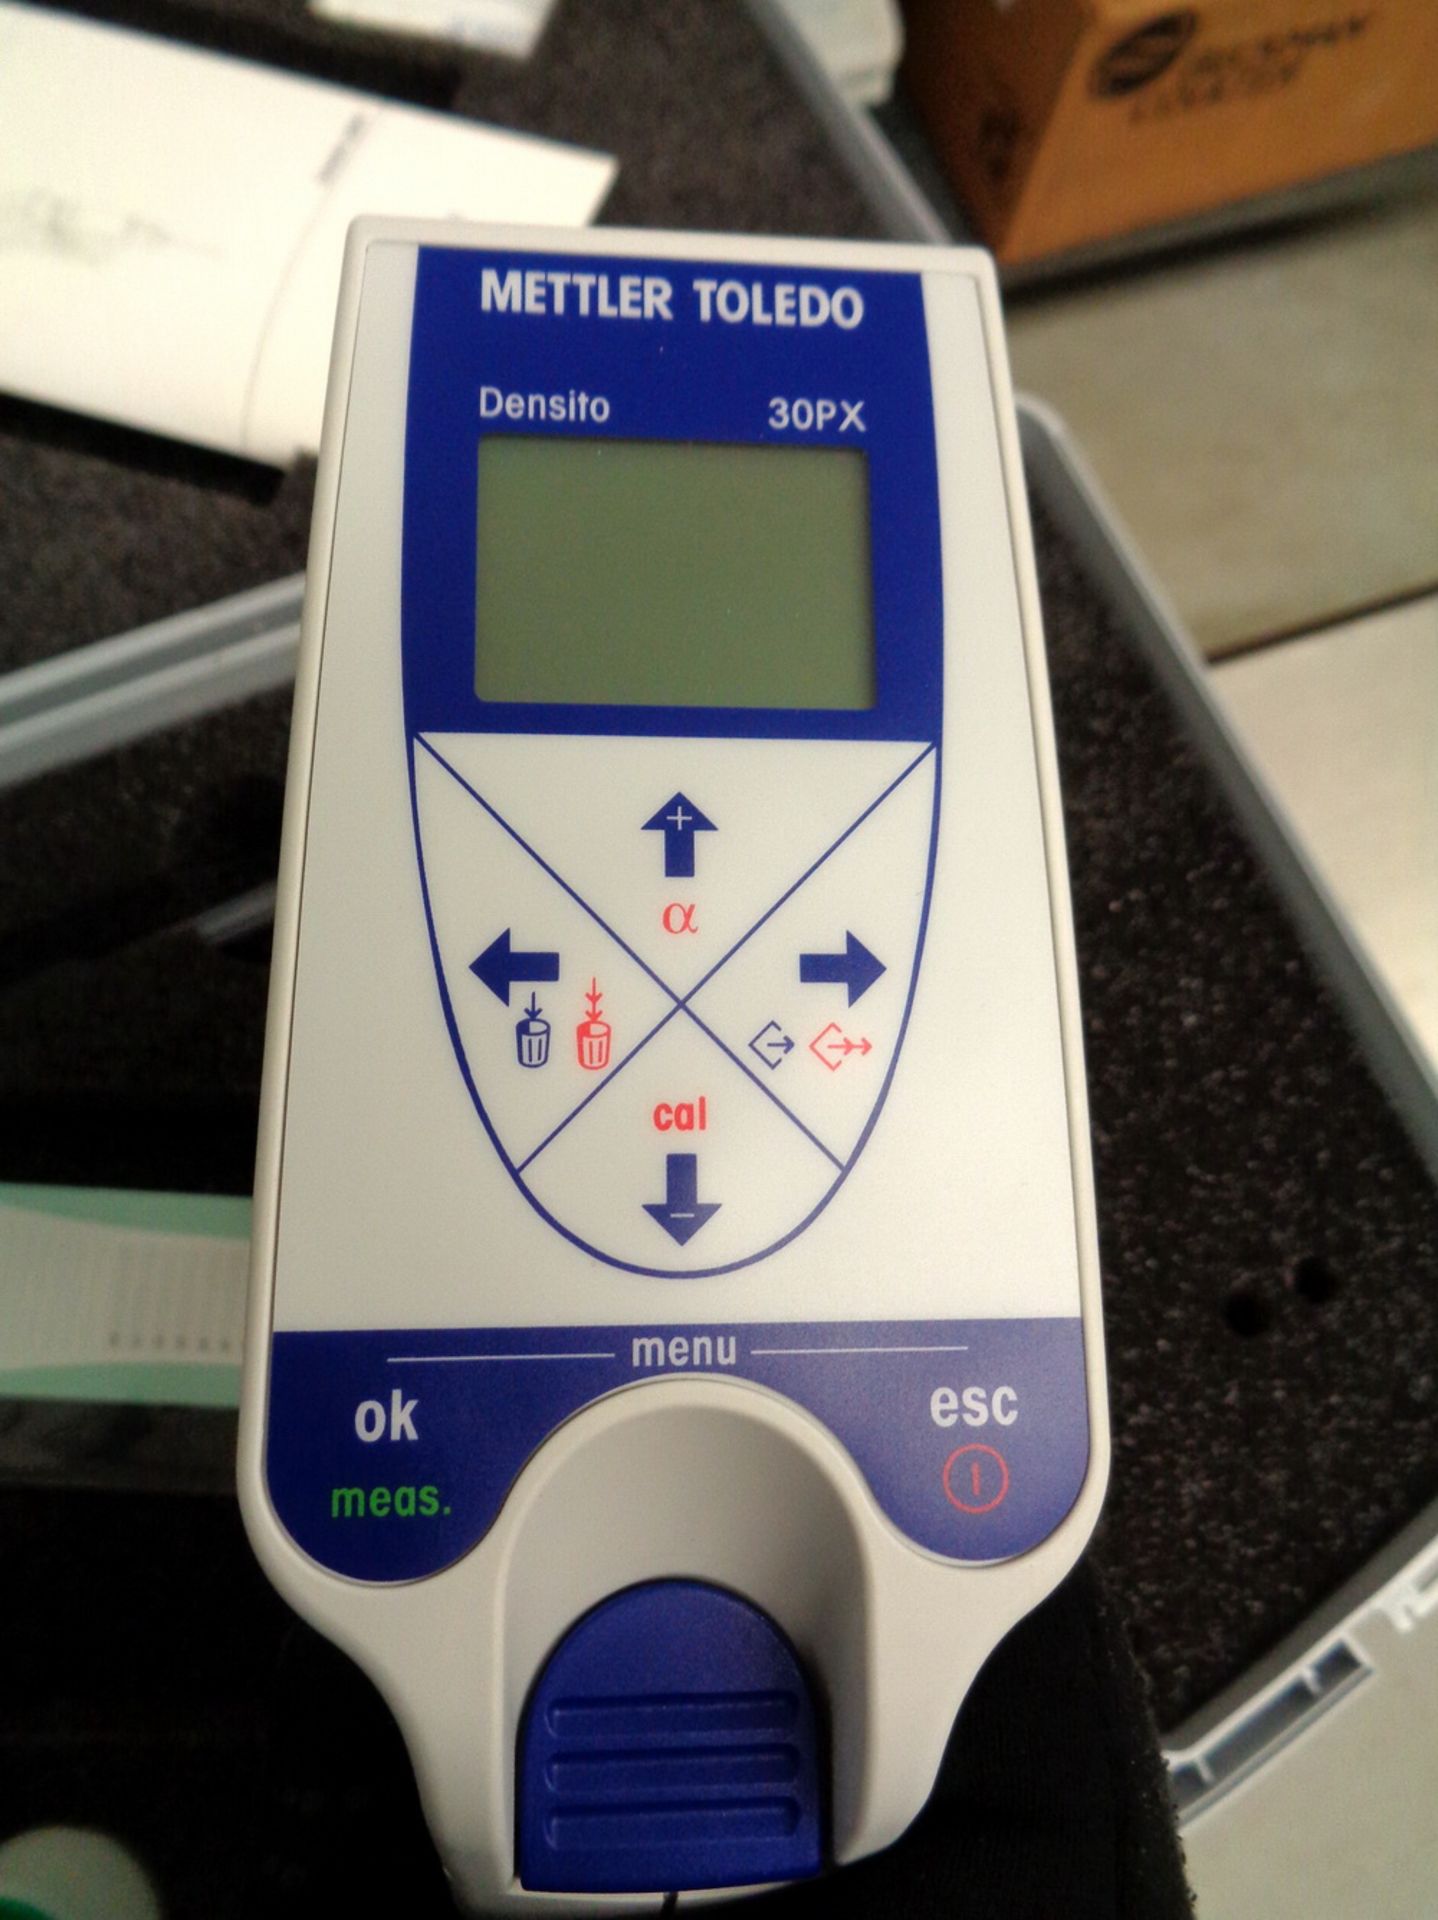 Mettler Toledo PortableLab Handheld Density Meter, Model Densito 30PX - Image 2 of 4